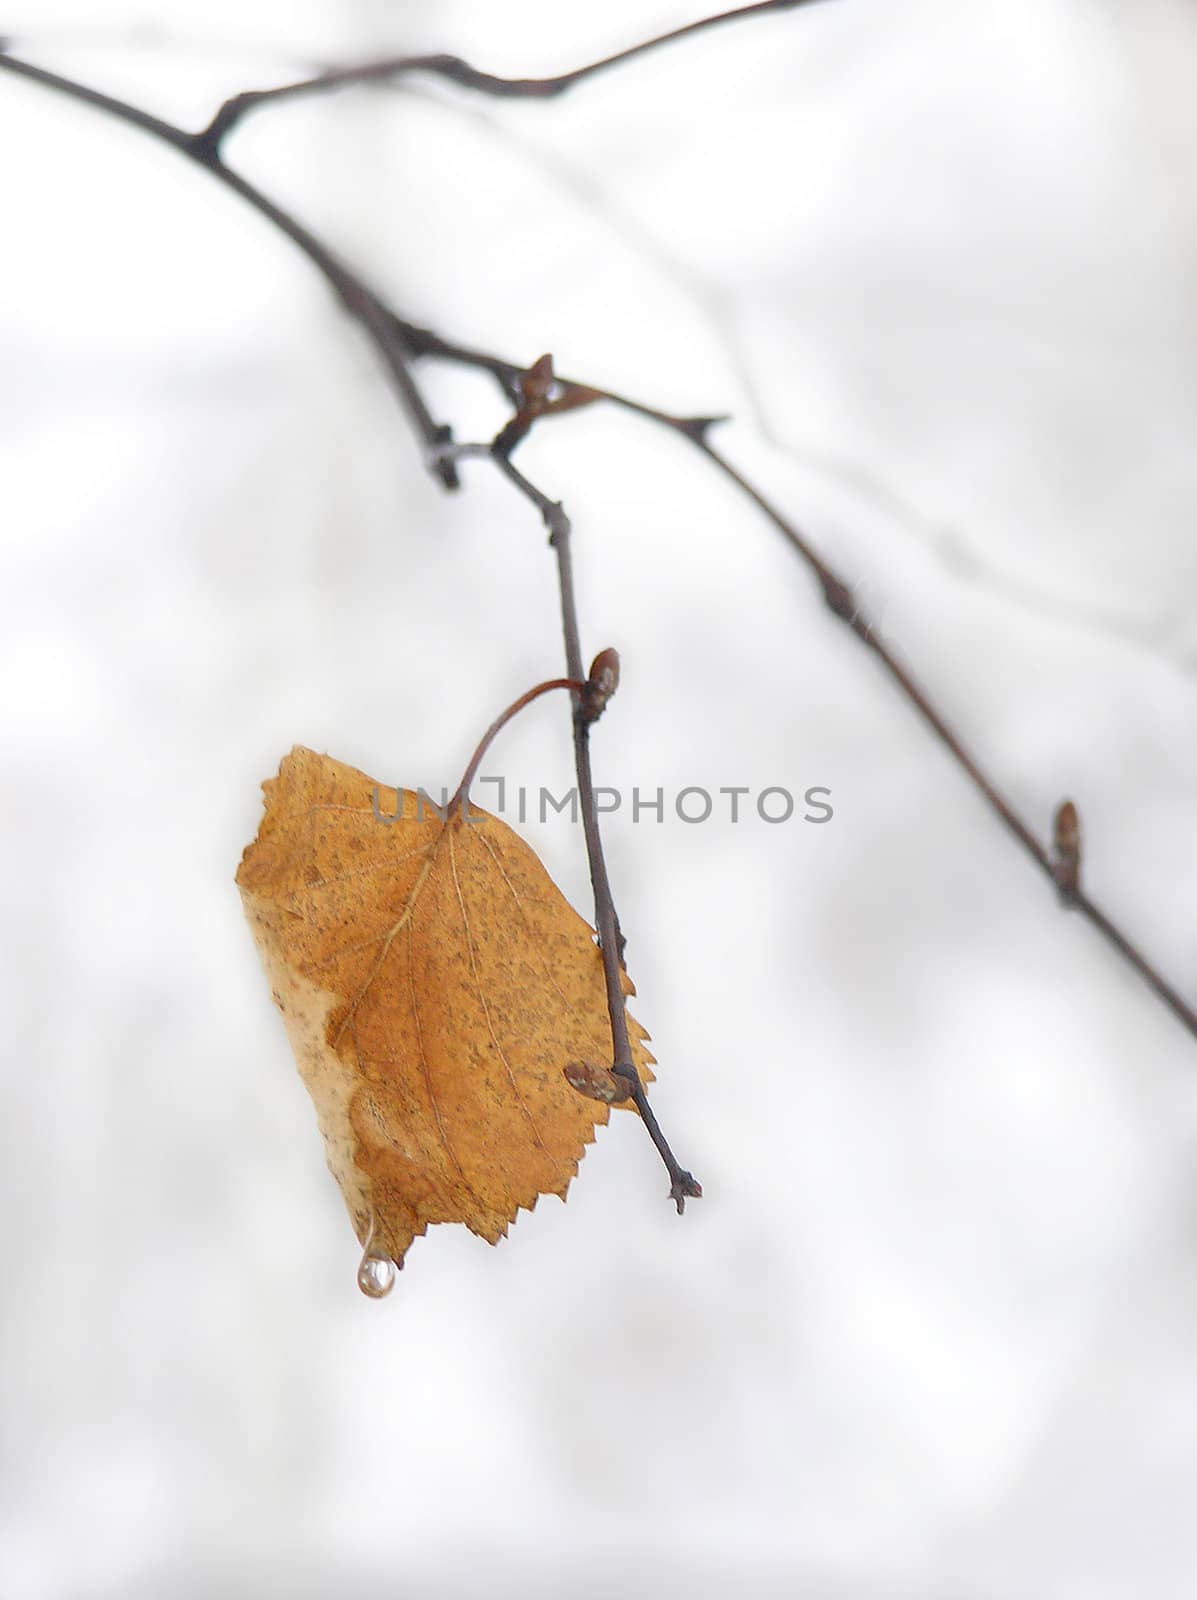 The yellow birch leaf in a foggy day    